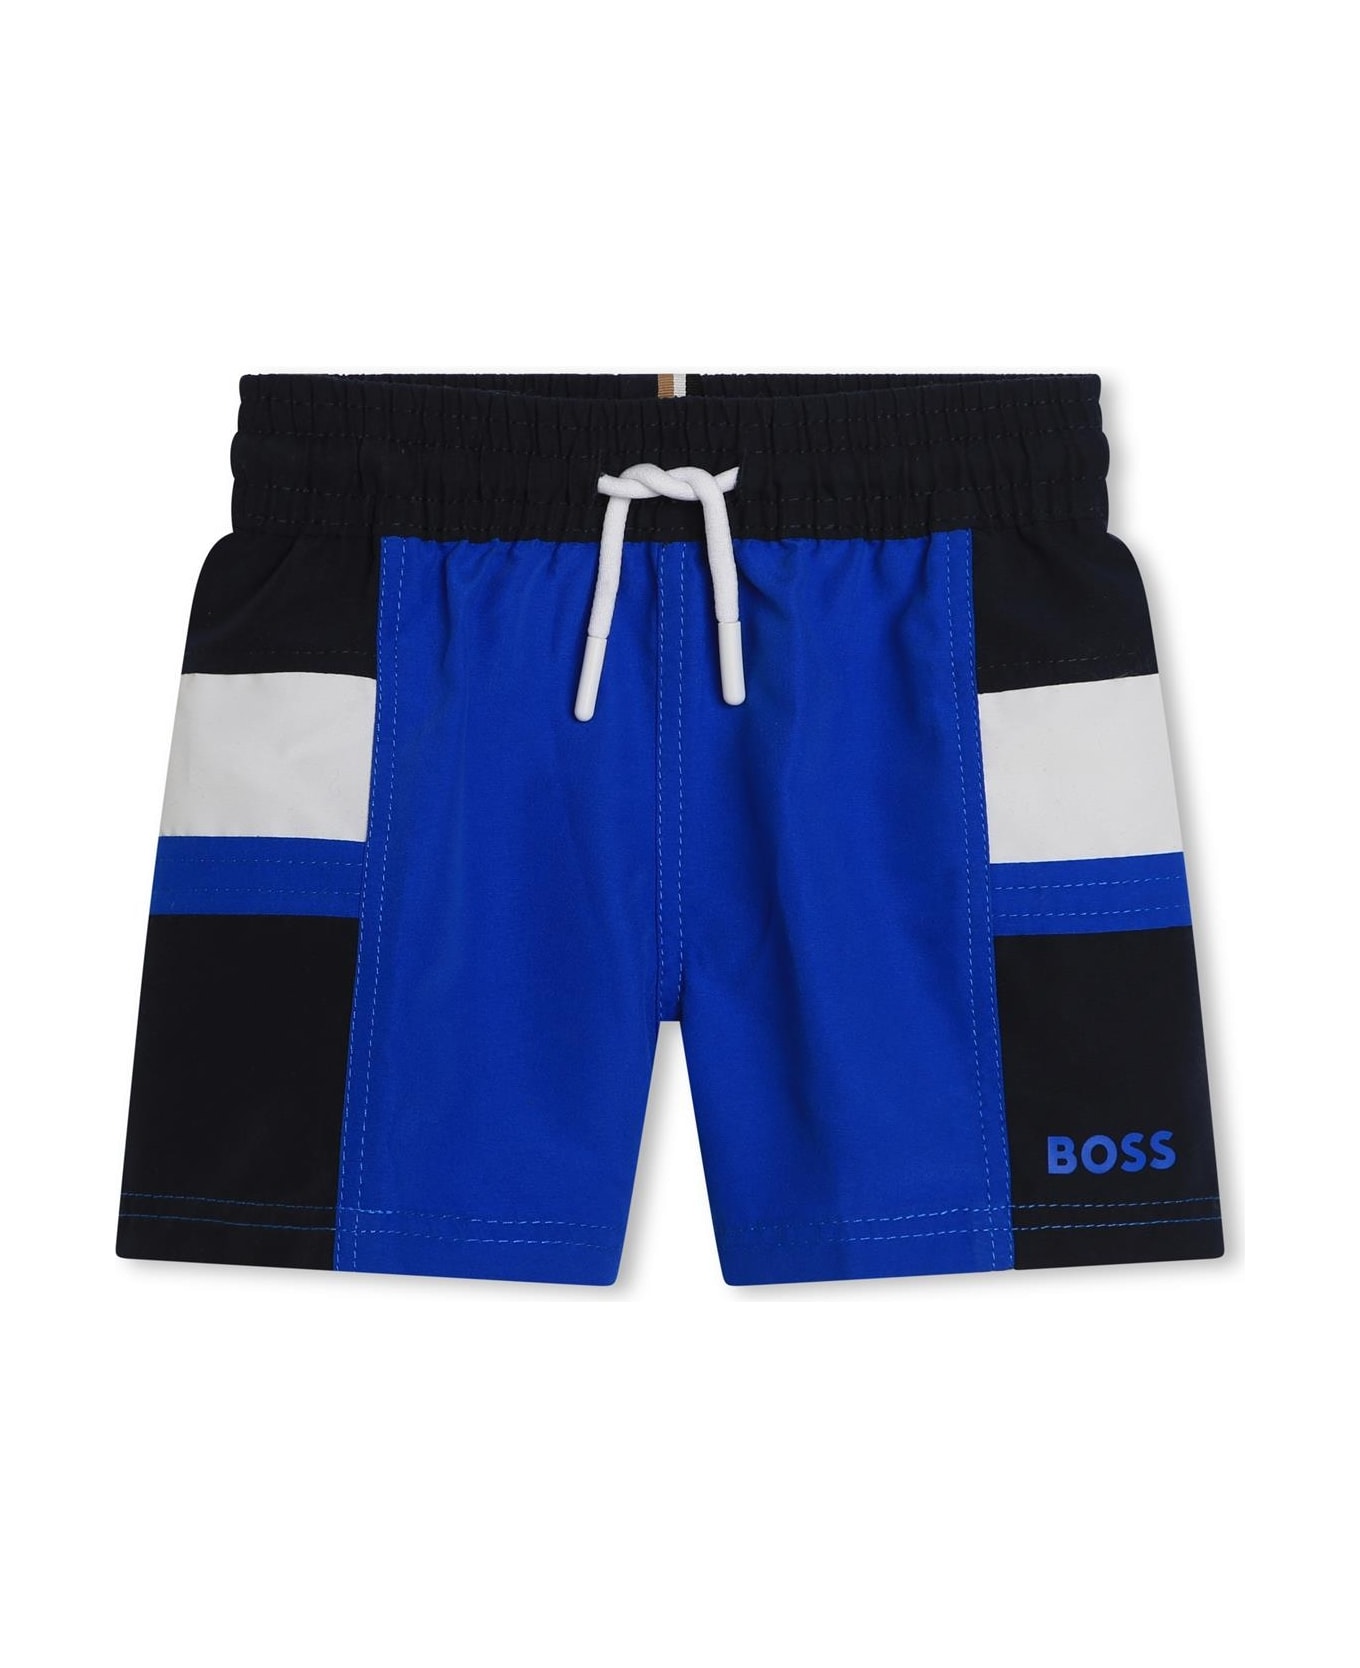 Hugo Boss Swimsuit With Color-block Design - Blue